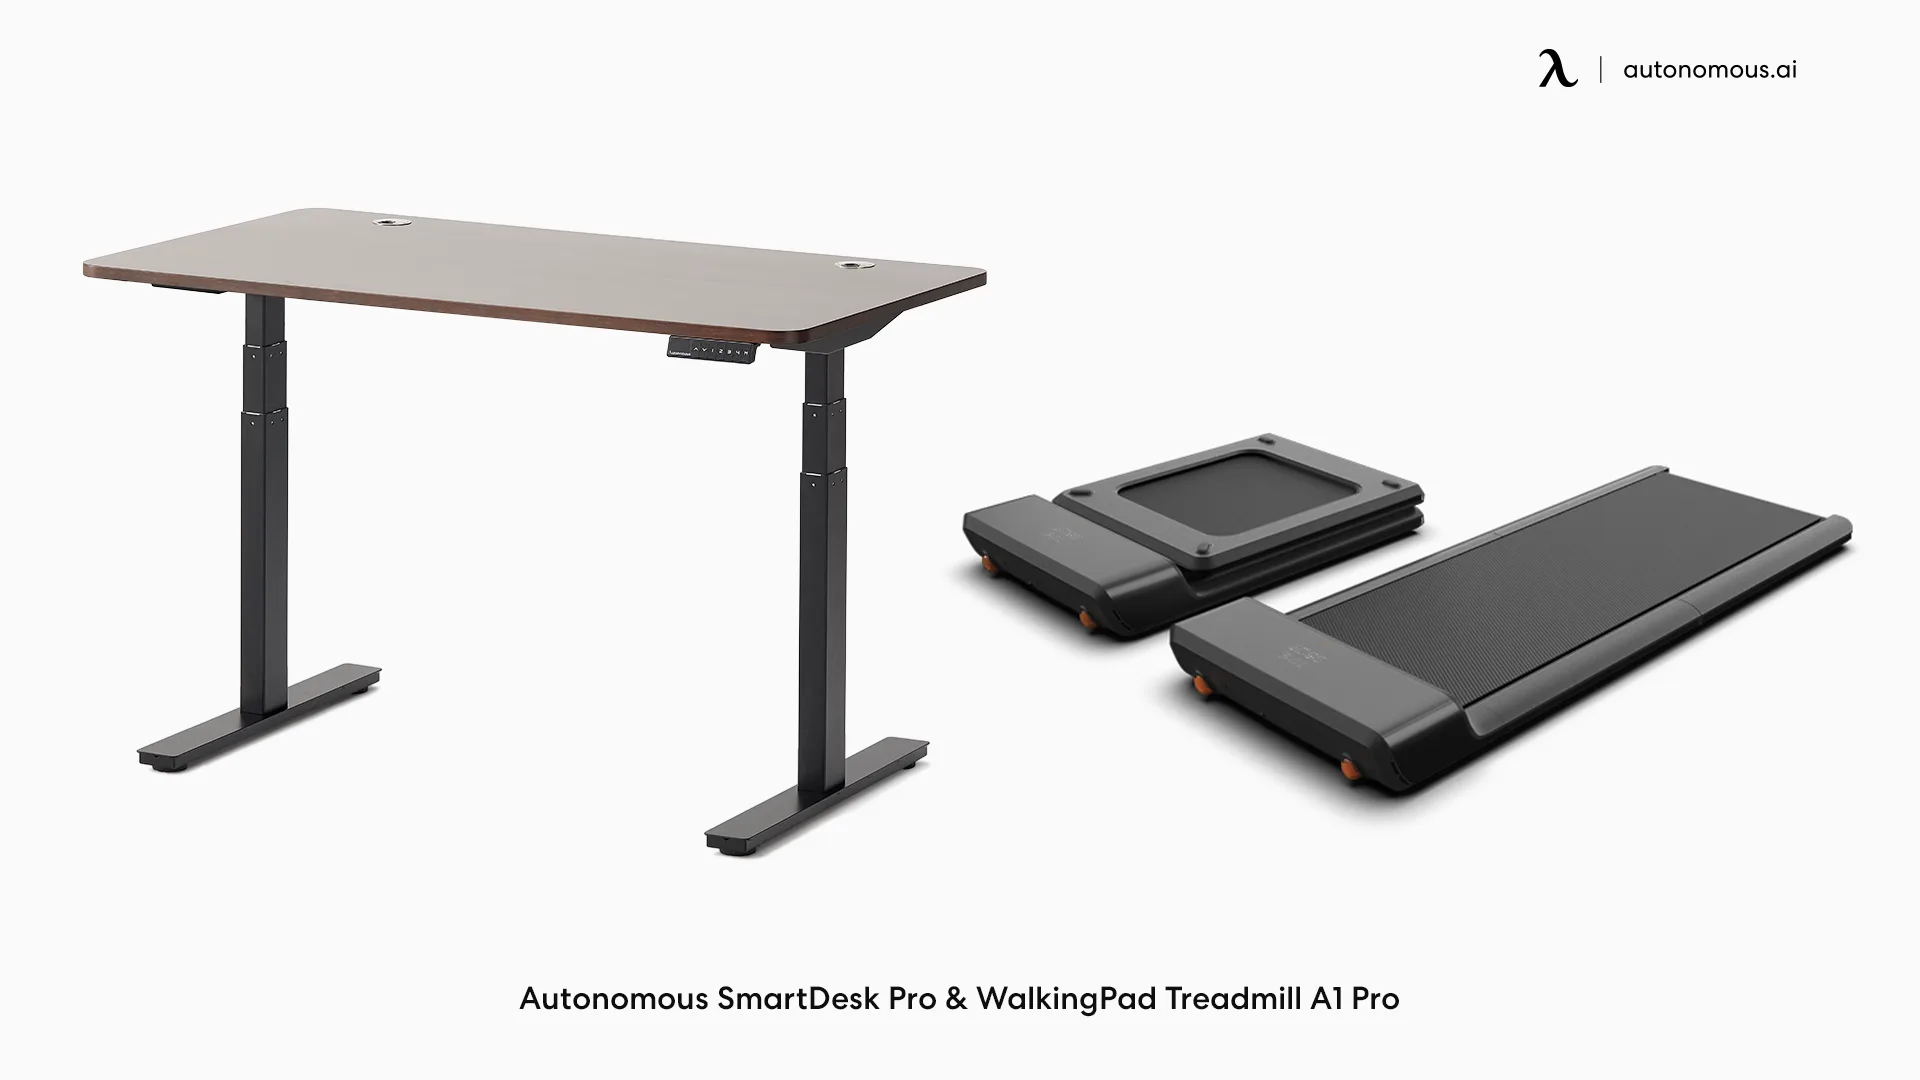 Autonomous SmartDesk Pro & WalkingPad Treadmill A1 Pro